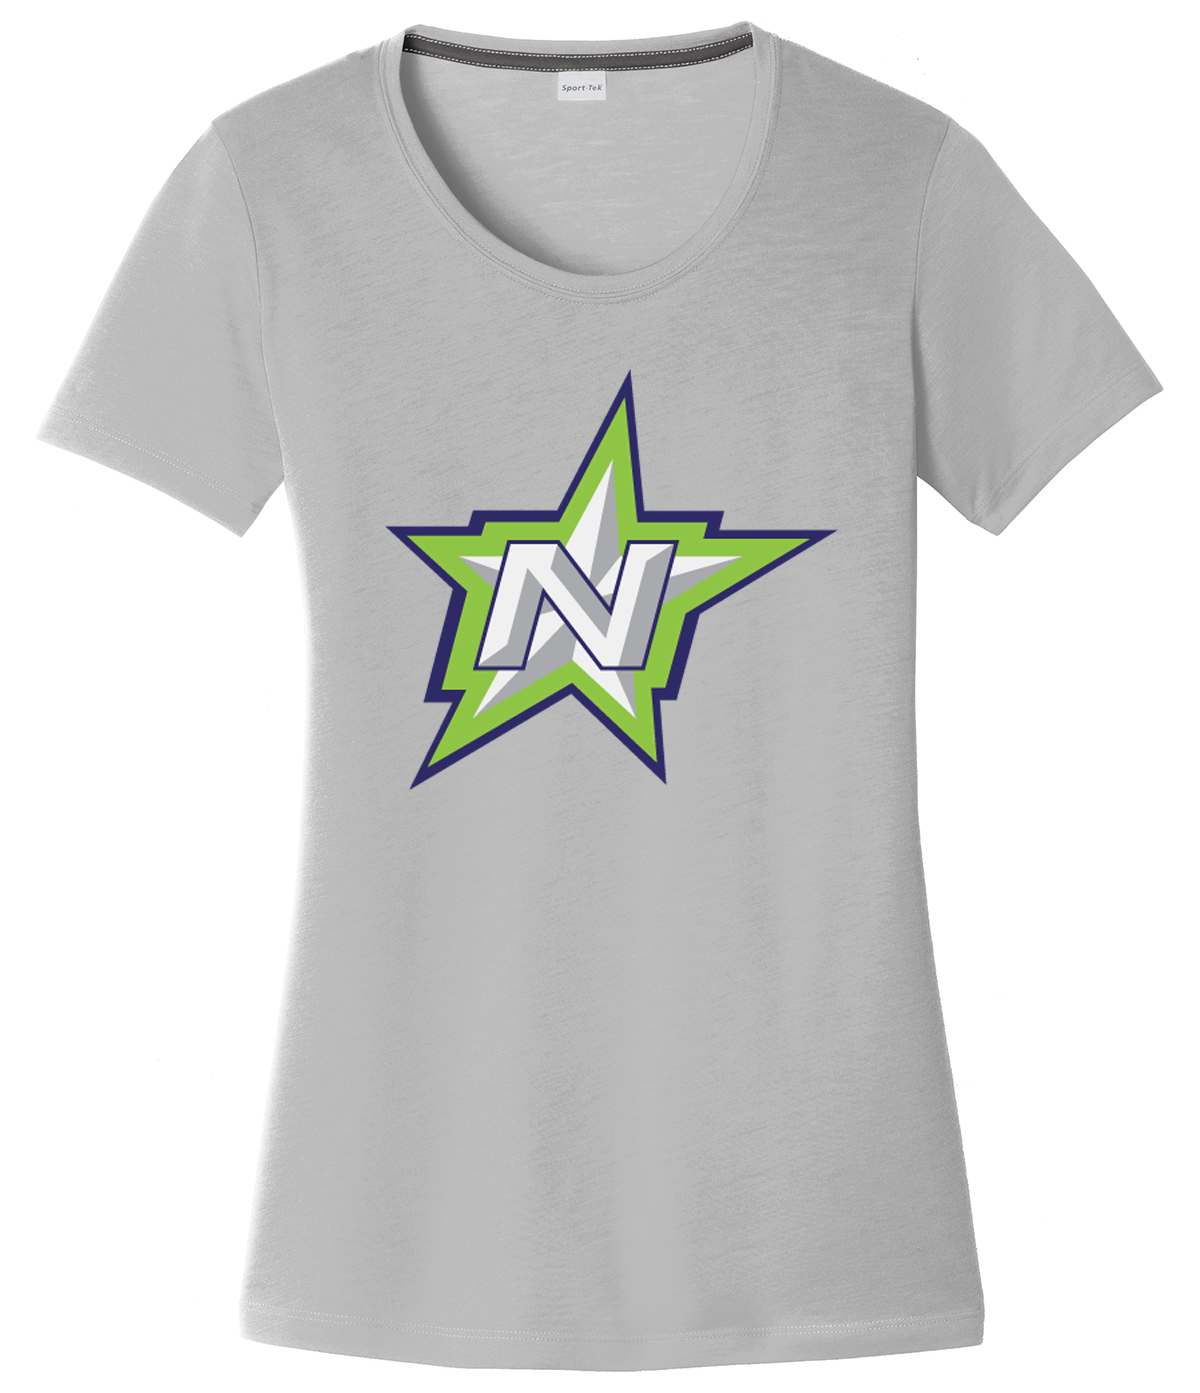 Northstar Baseball Women's Silver CottonTouch Performance T-Shirt